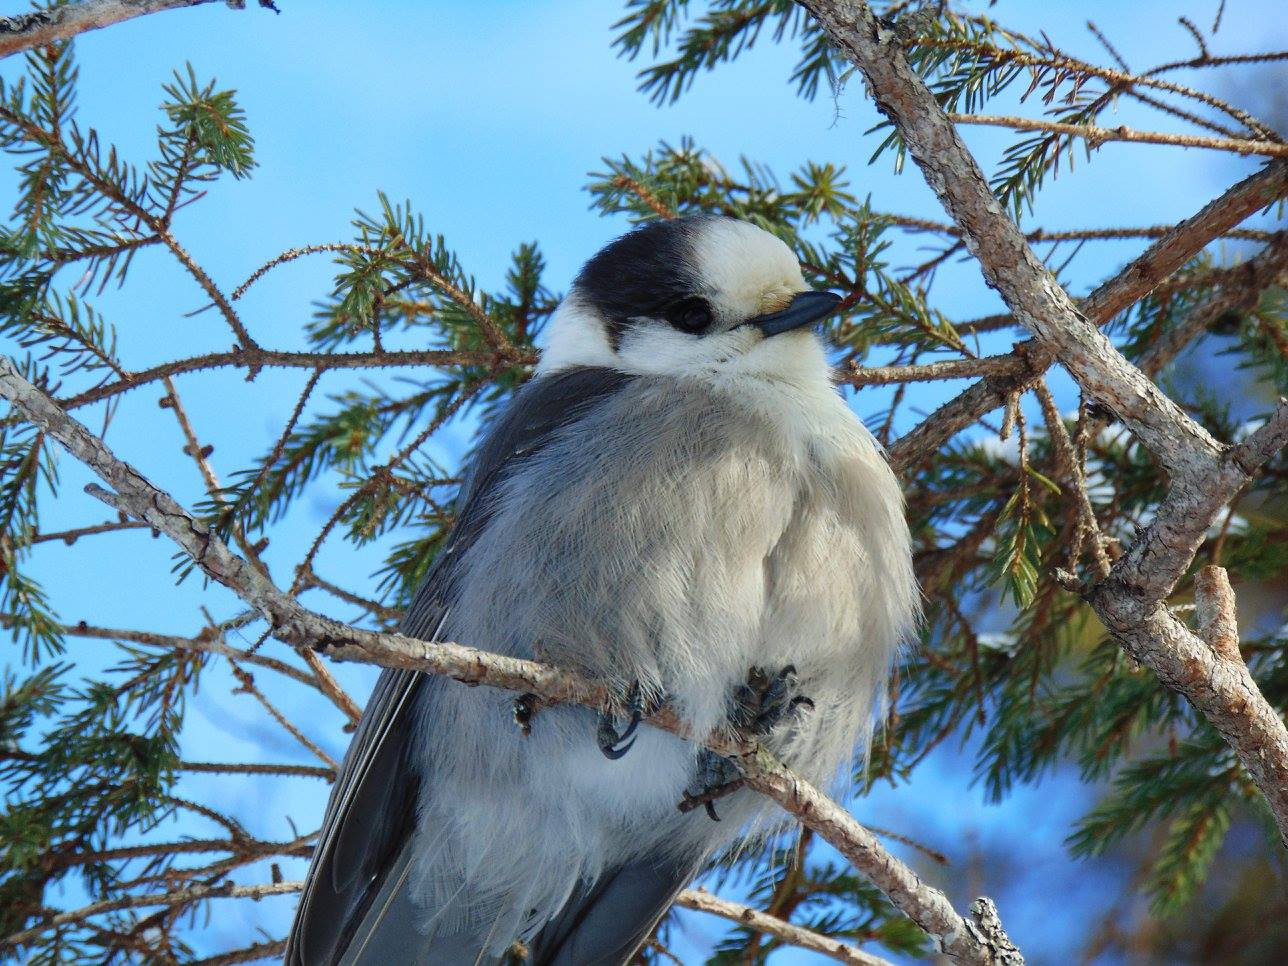 A fluffy dark and light gray bird sitting in a pine tree.